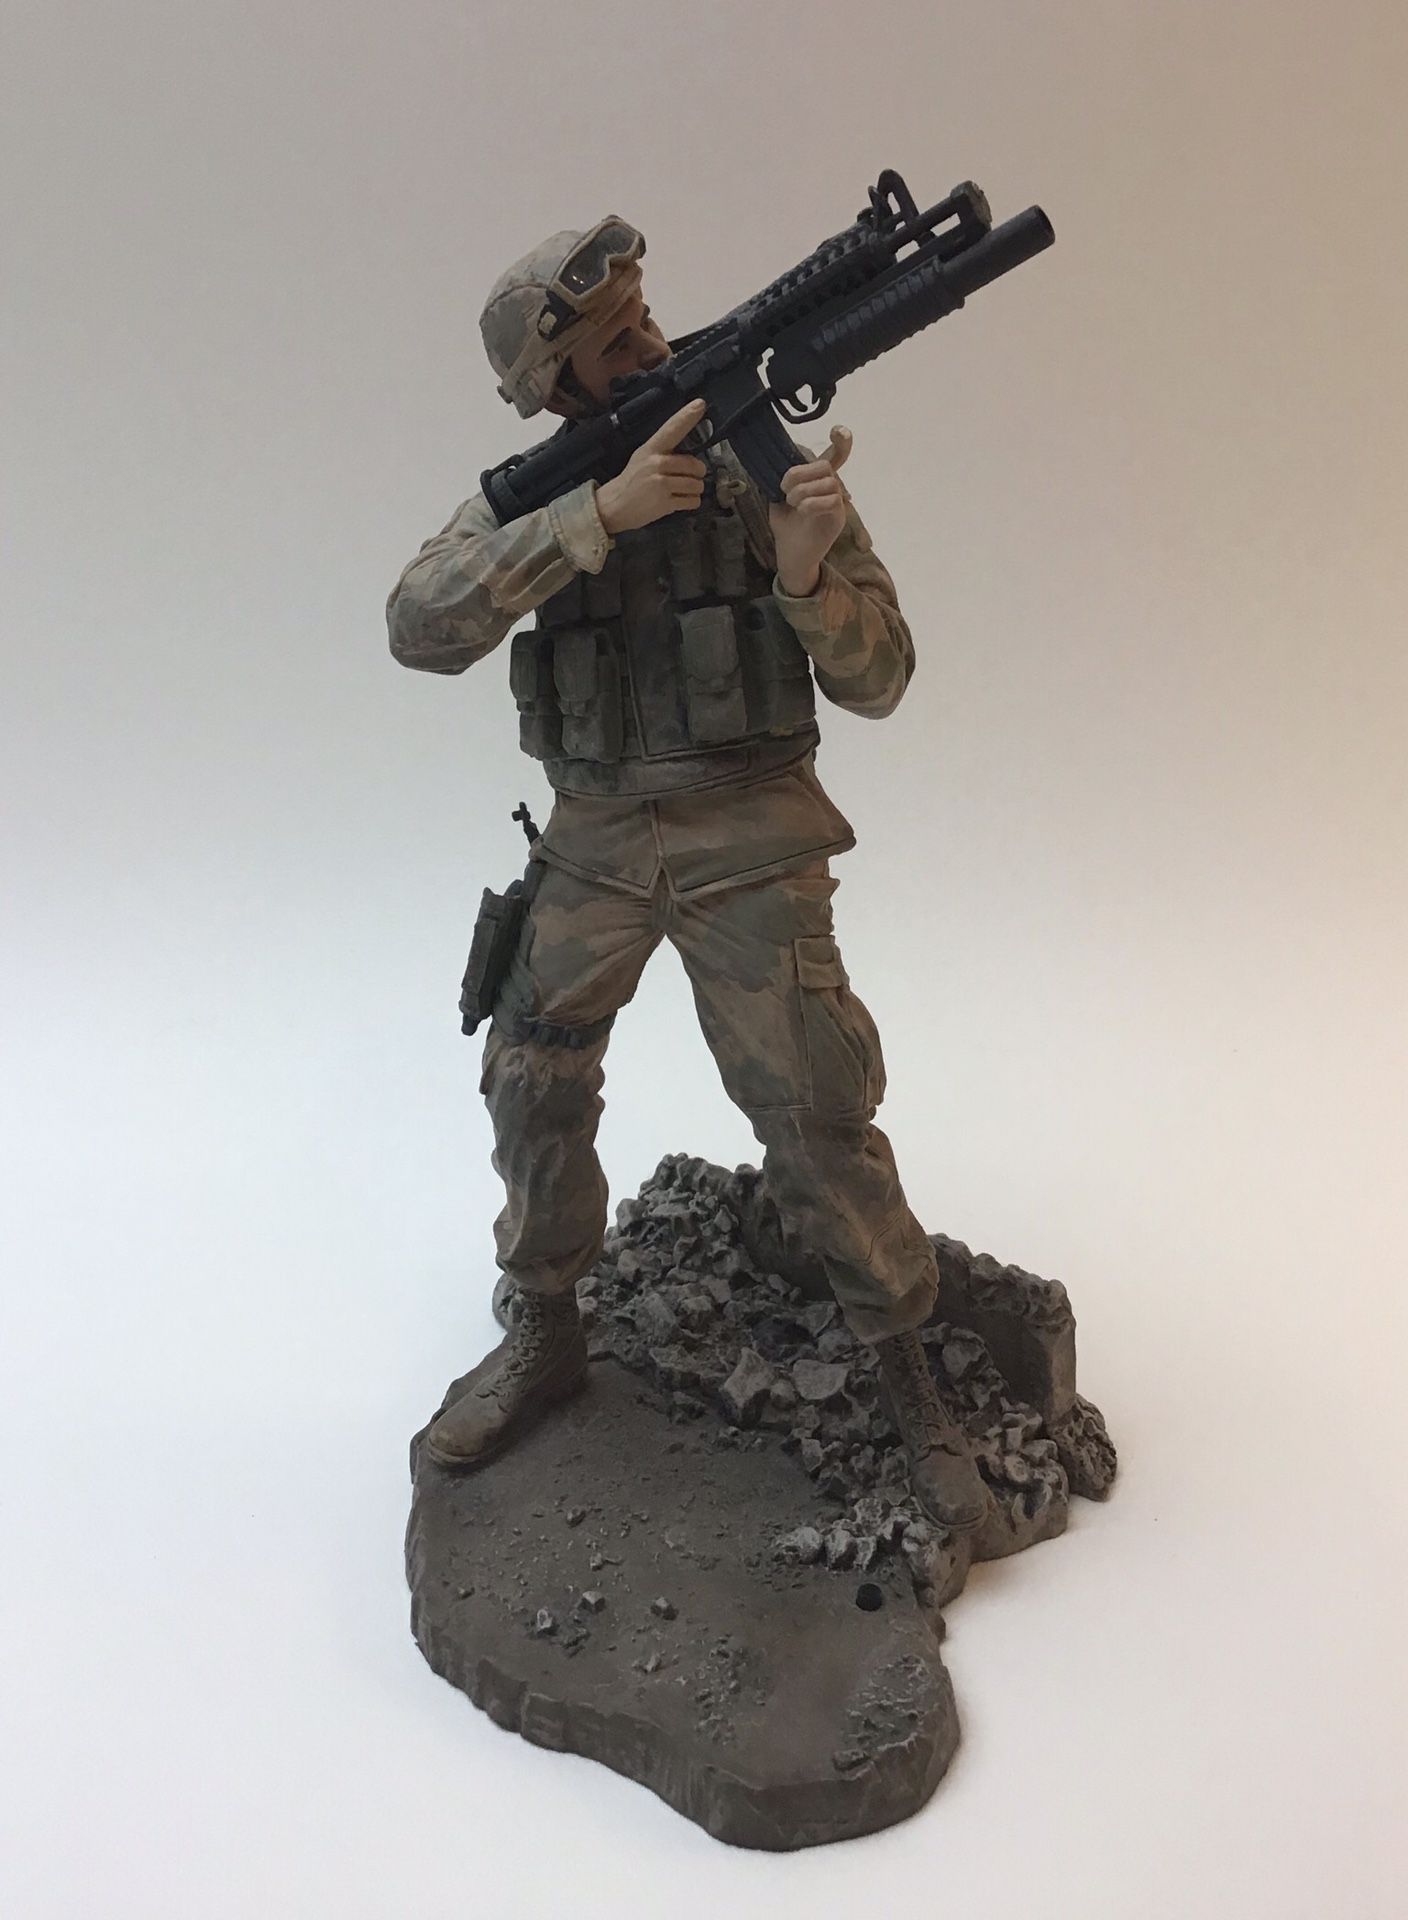 McFarlane military figure